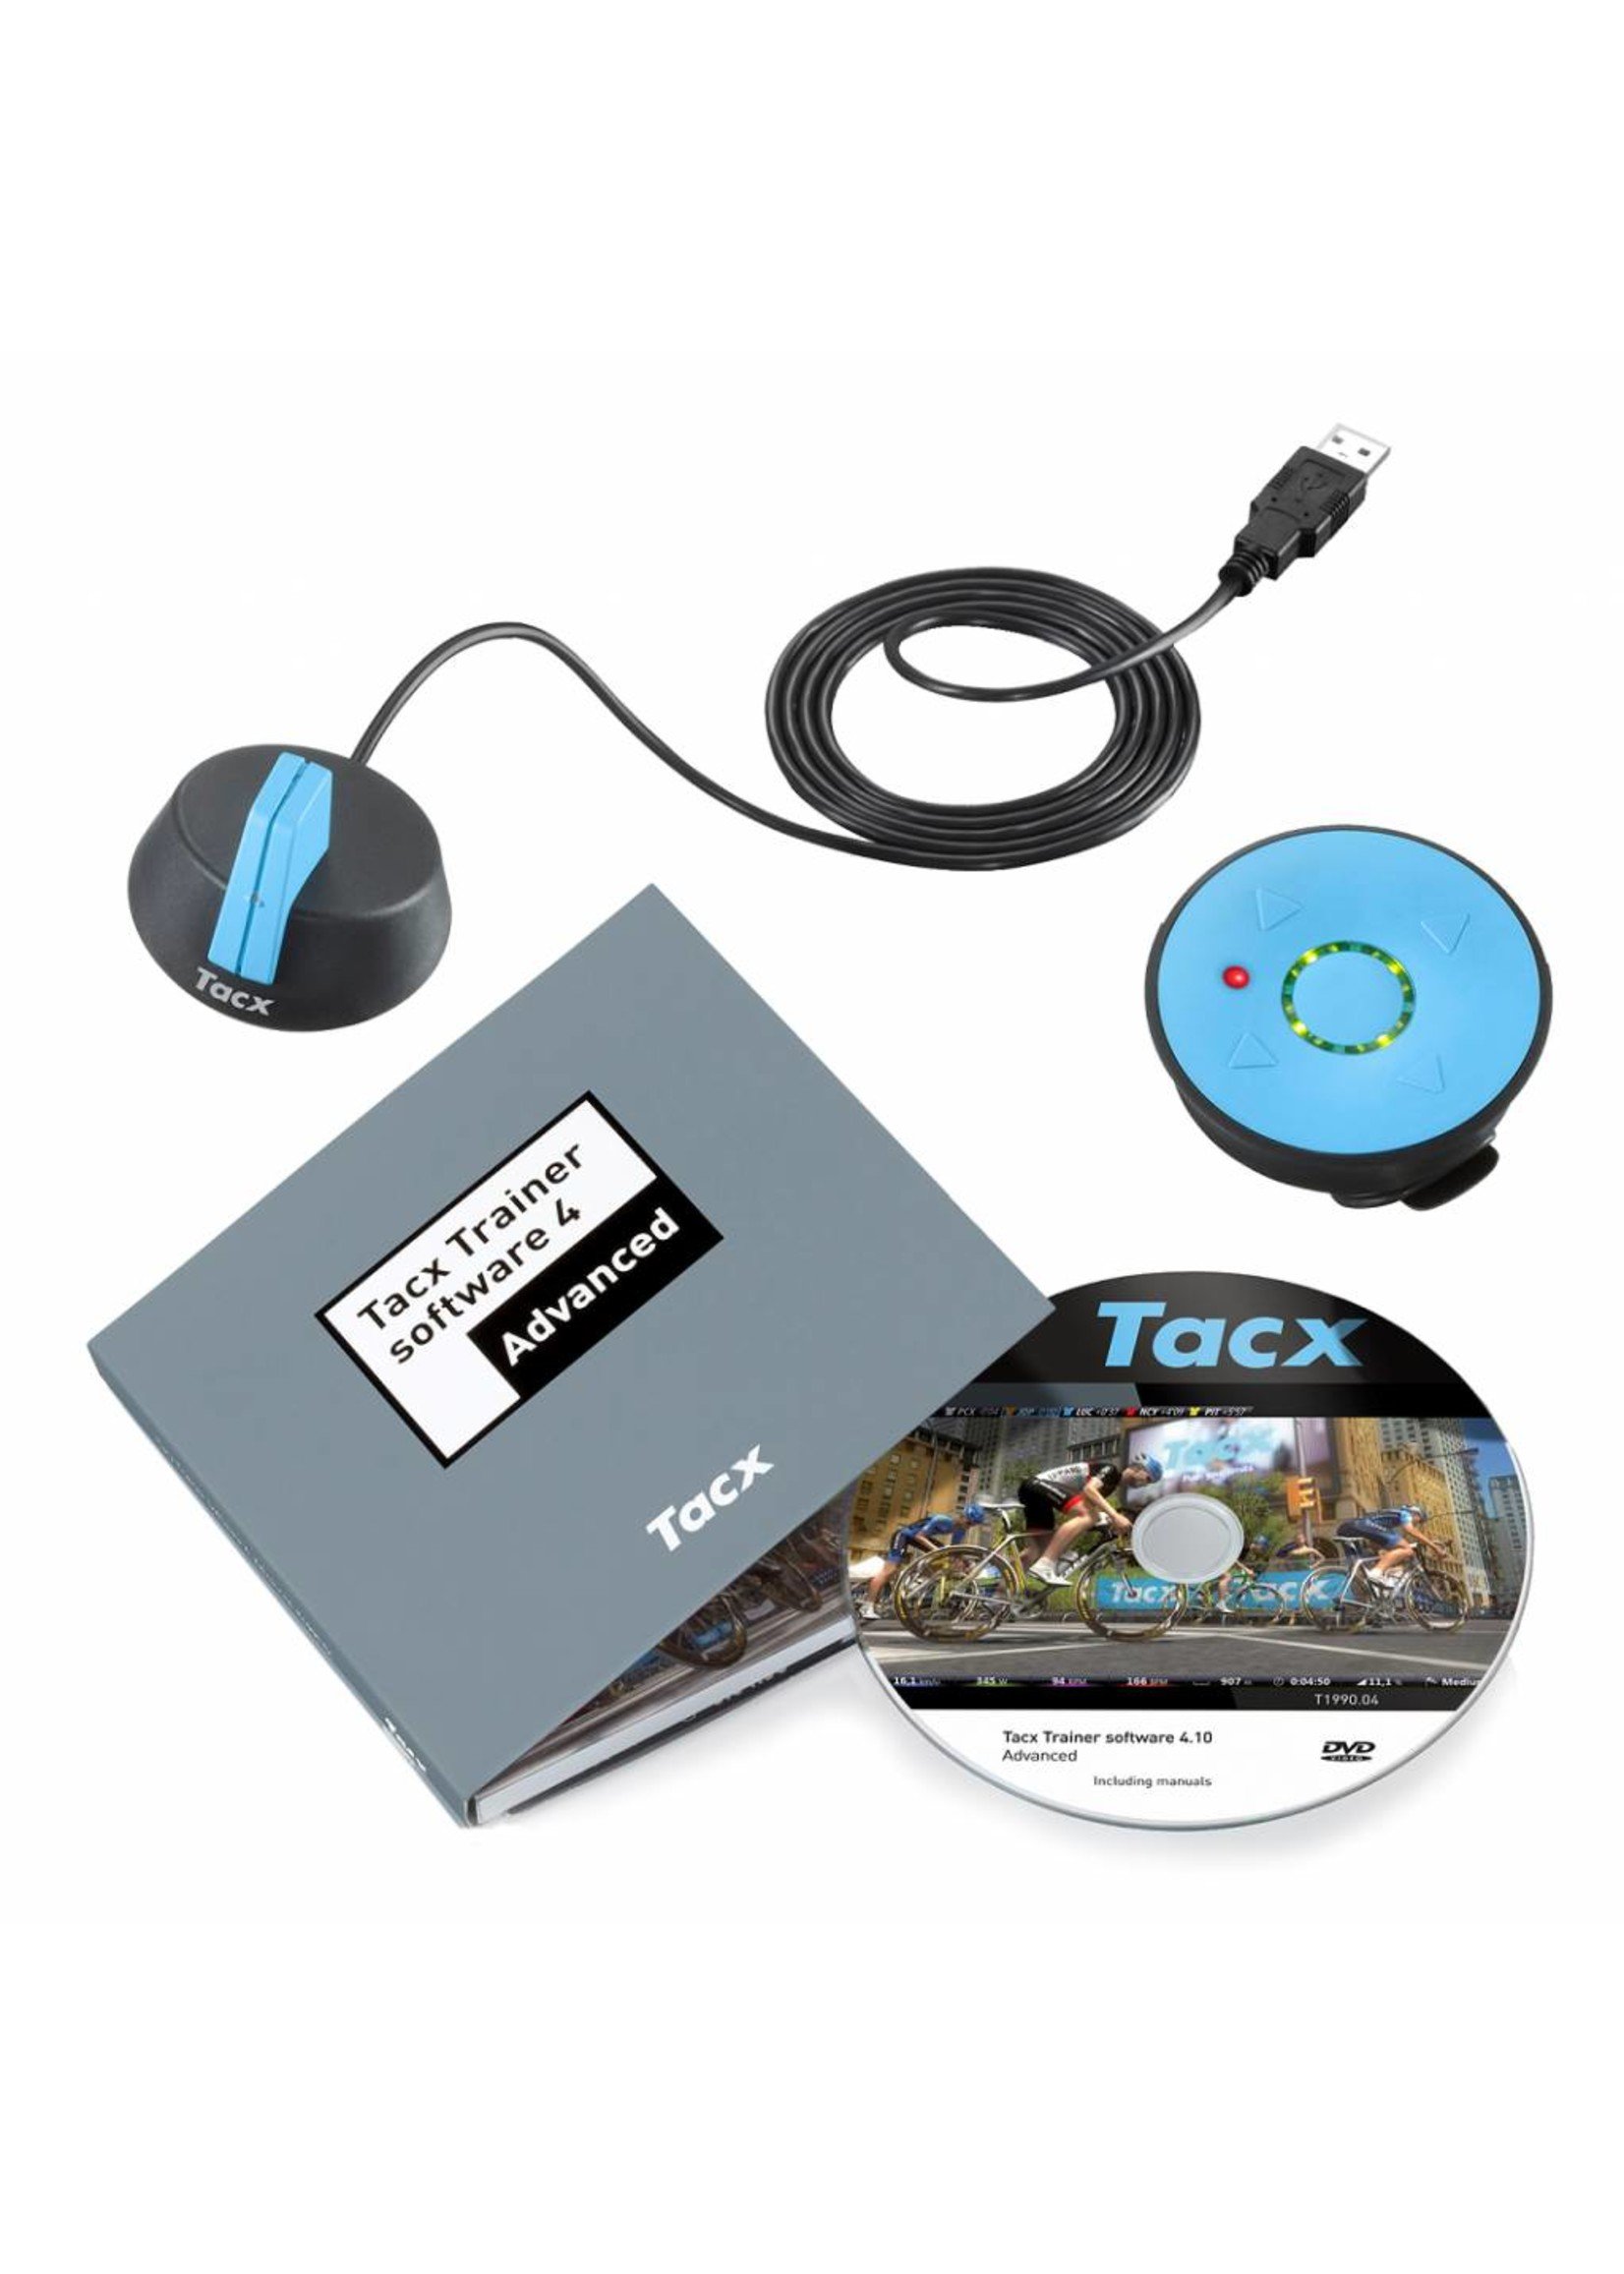 tacx trainer software 4 advanced crack